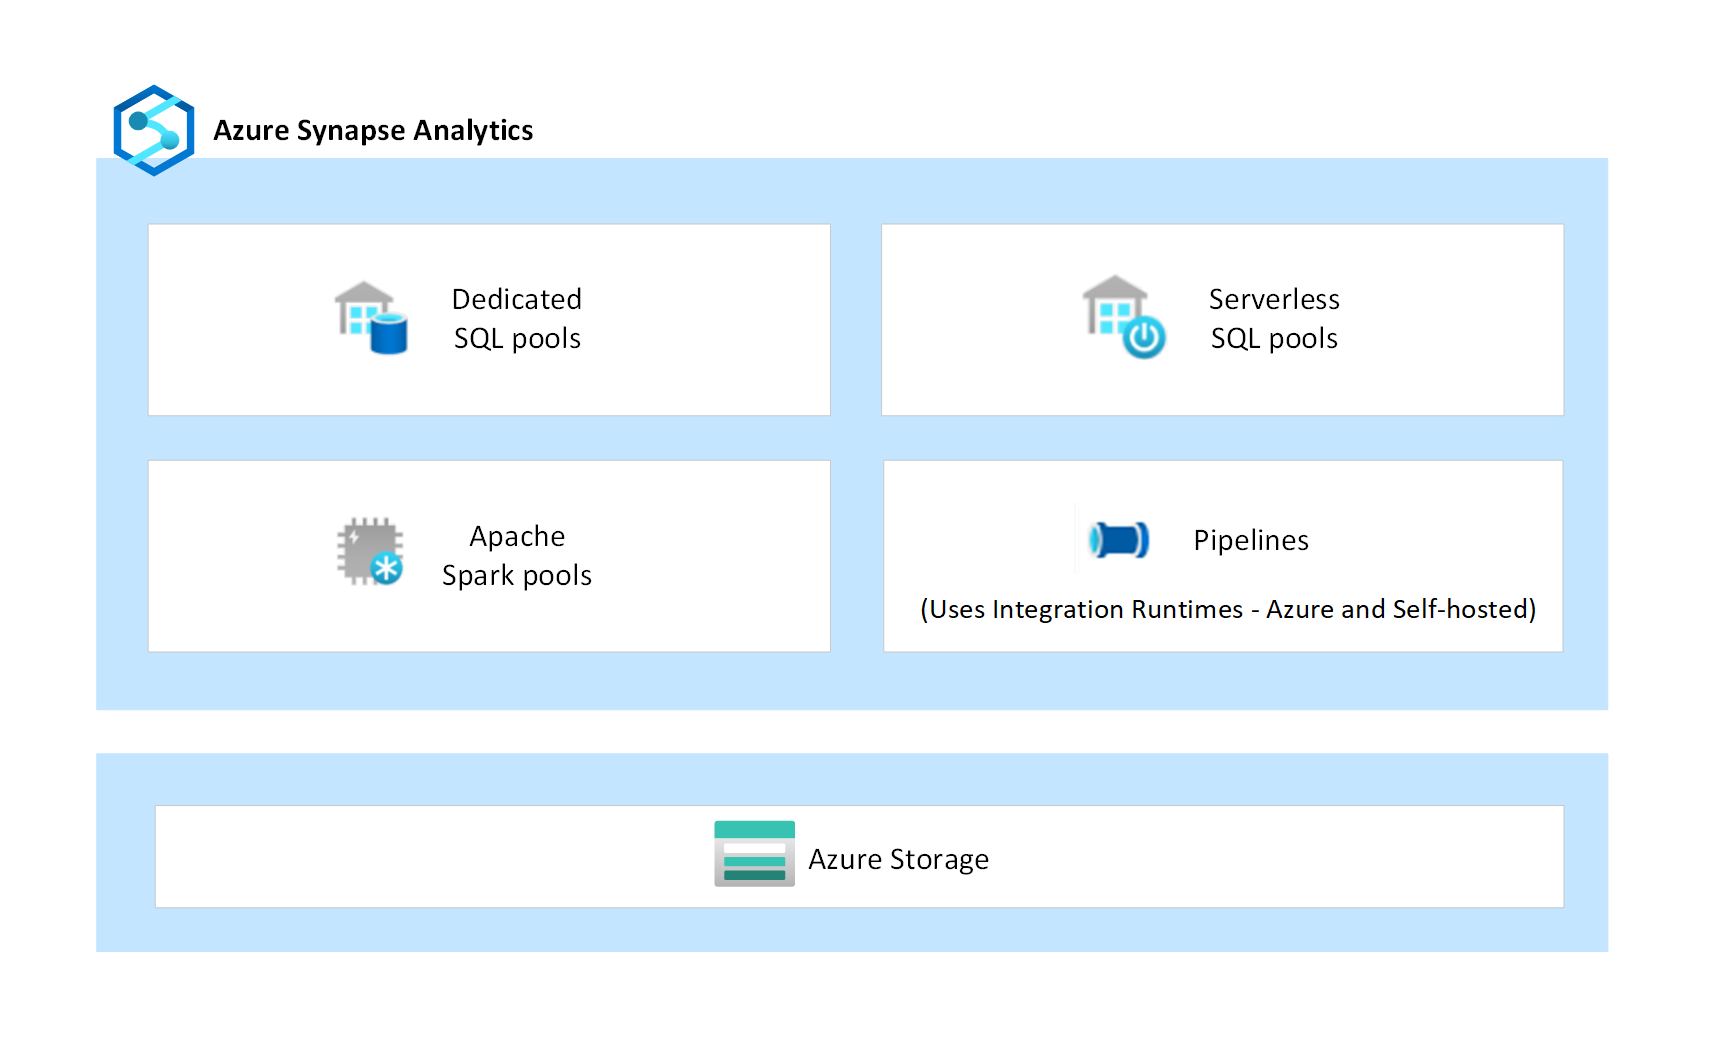 Diagrama de Azure Synapse componentes mostrando pools de SQL dedicados, pools de SQL sem servidor, pools do Apache Spark e pipelines.